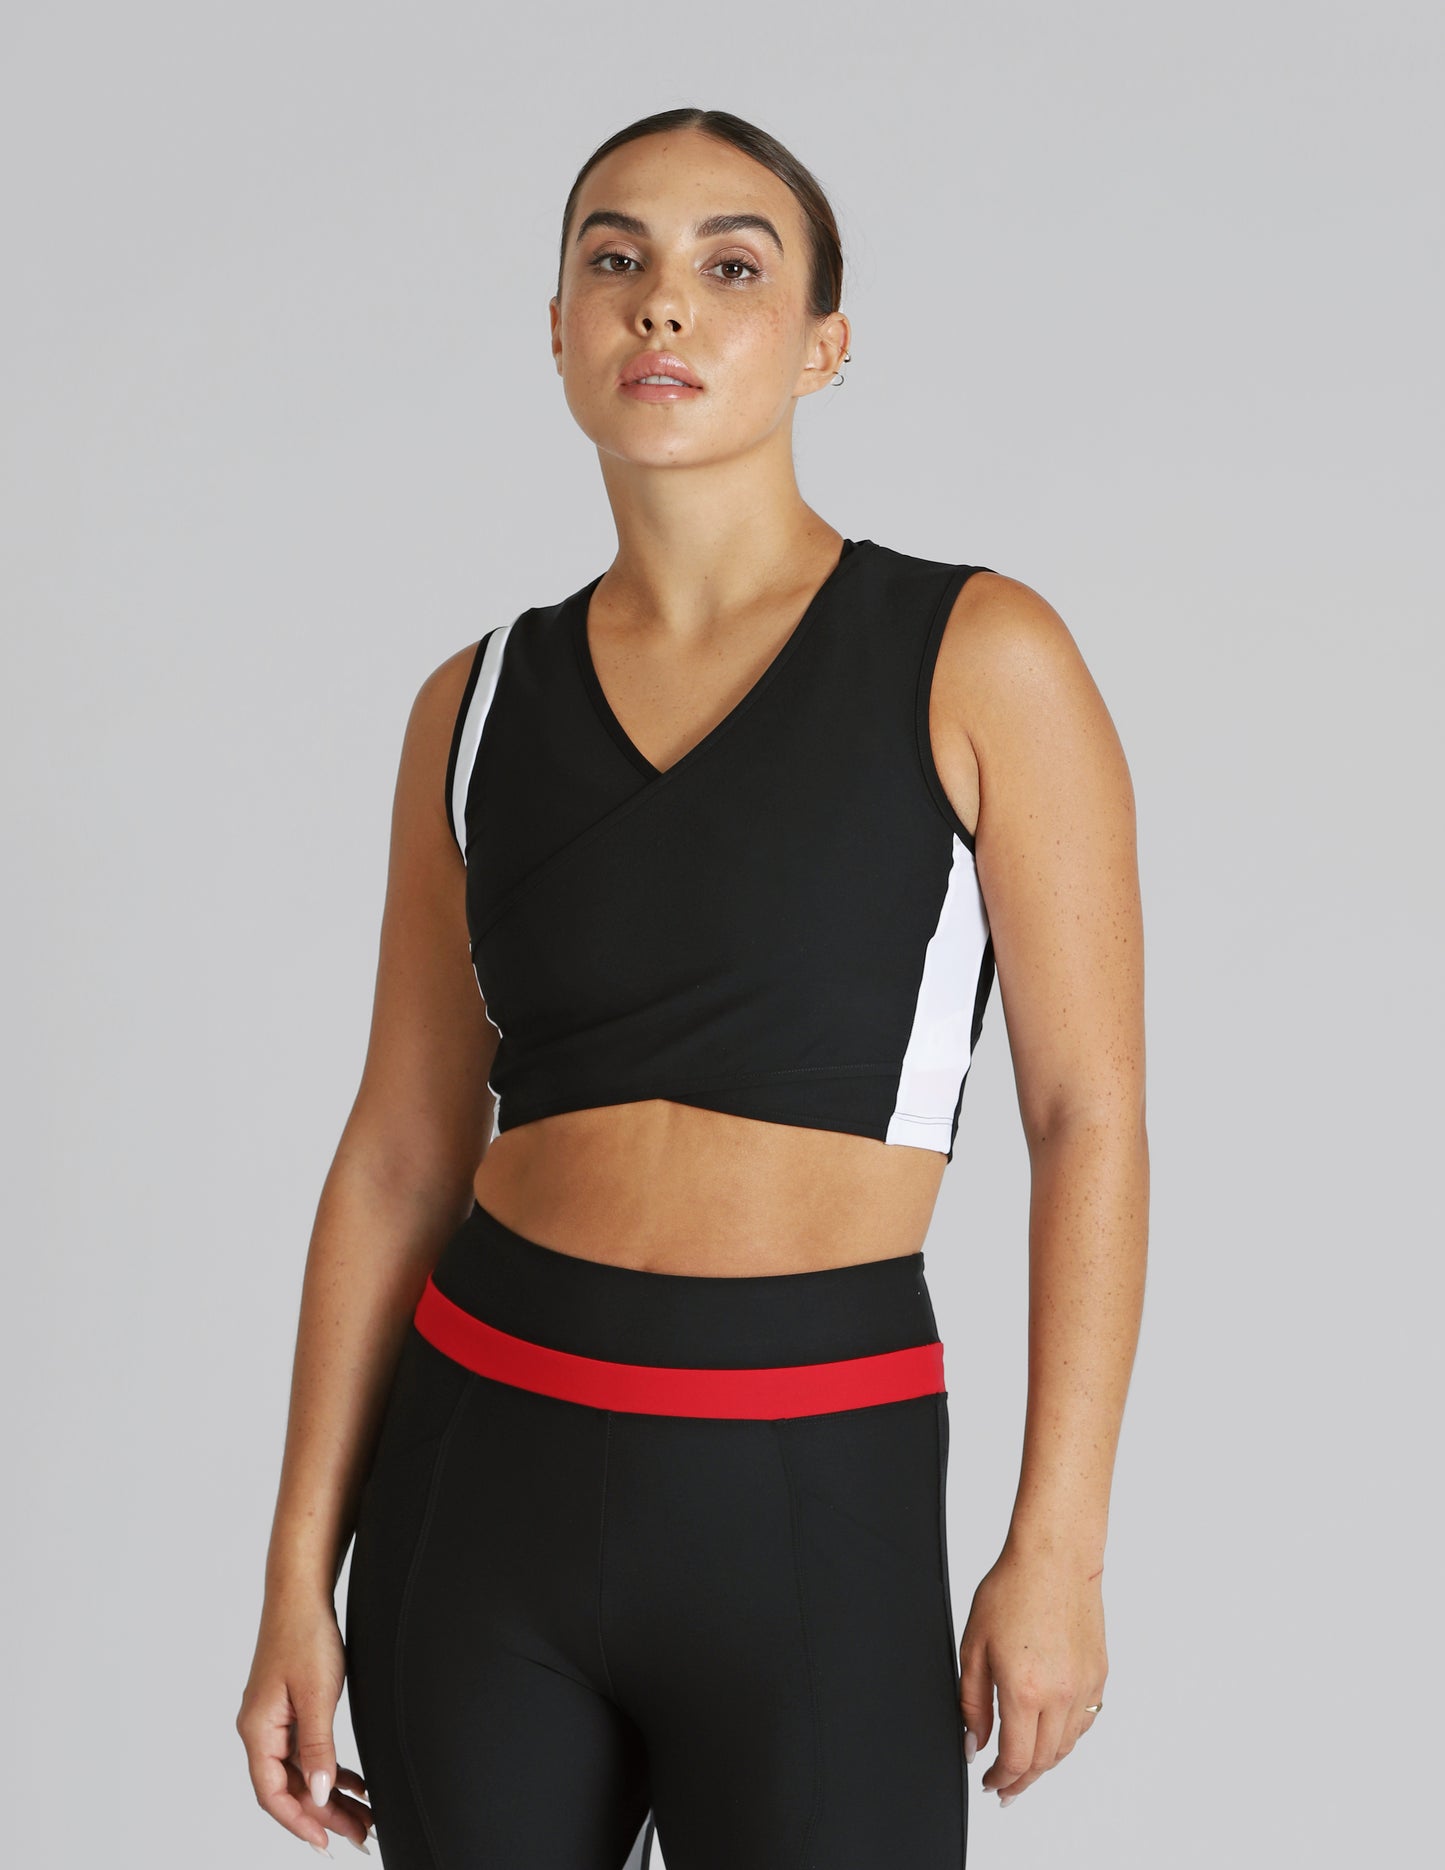 DAVINA FASHIONS Women's & Girl's Mini Camisole Sports Yoga Tops Nylon &  Spandex Camisole Free Size (26 to 34 Bust-Size)